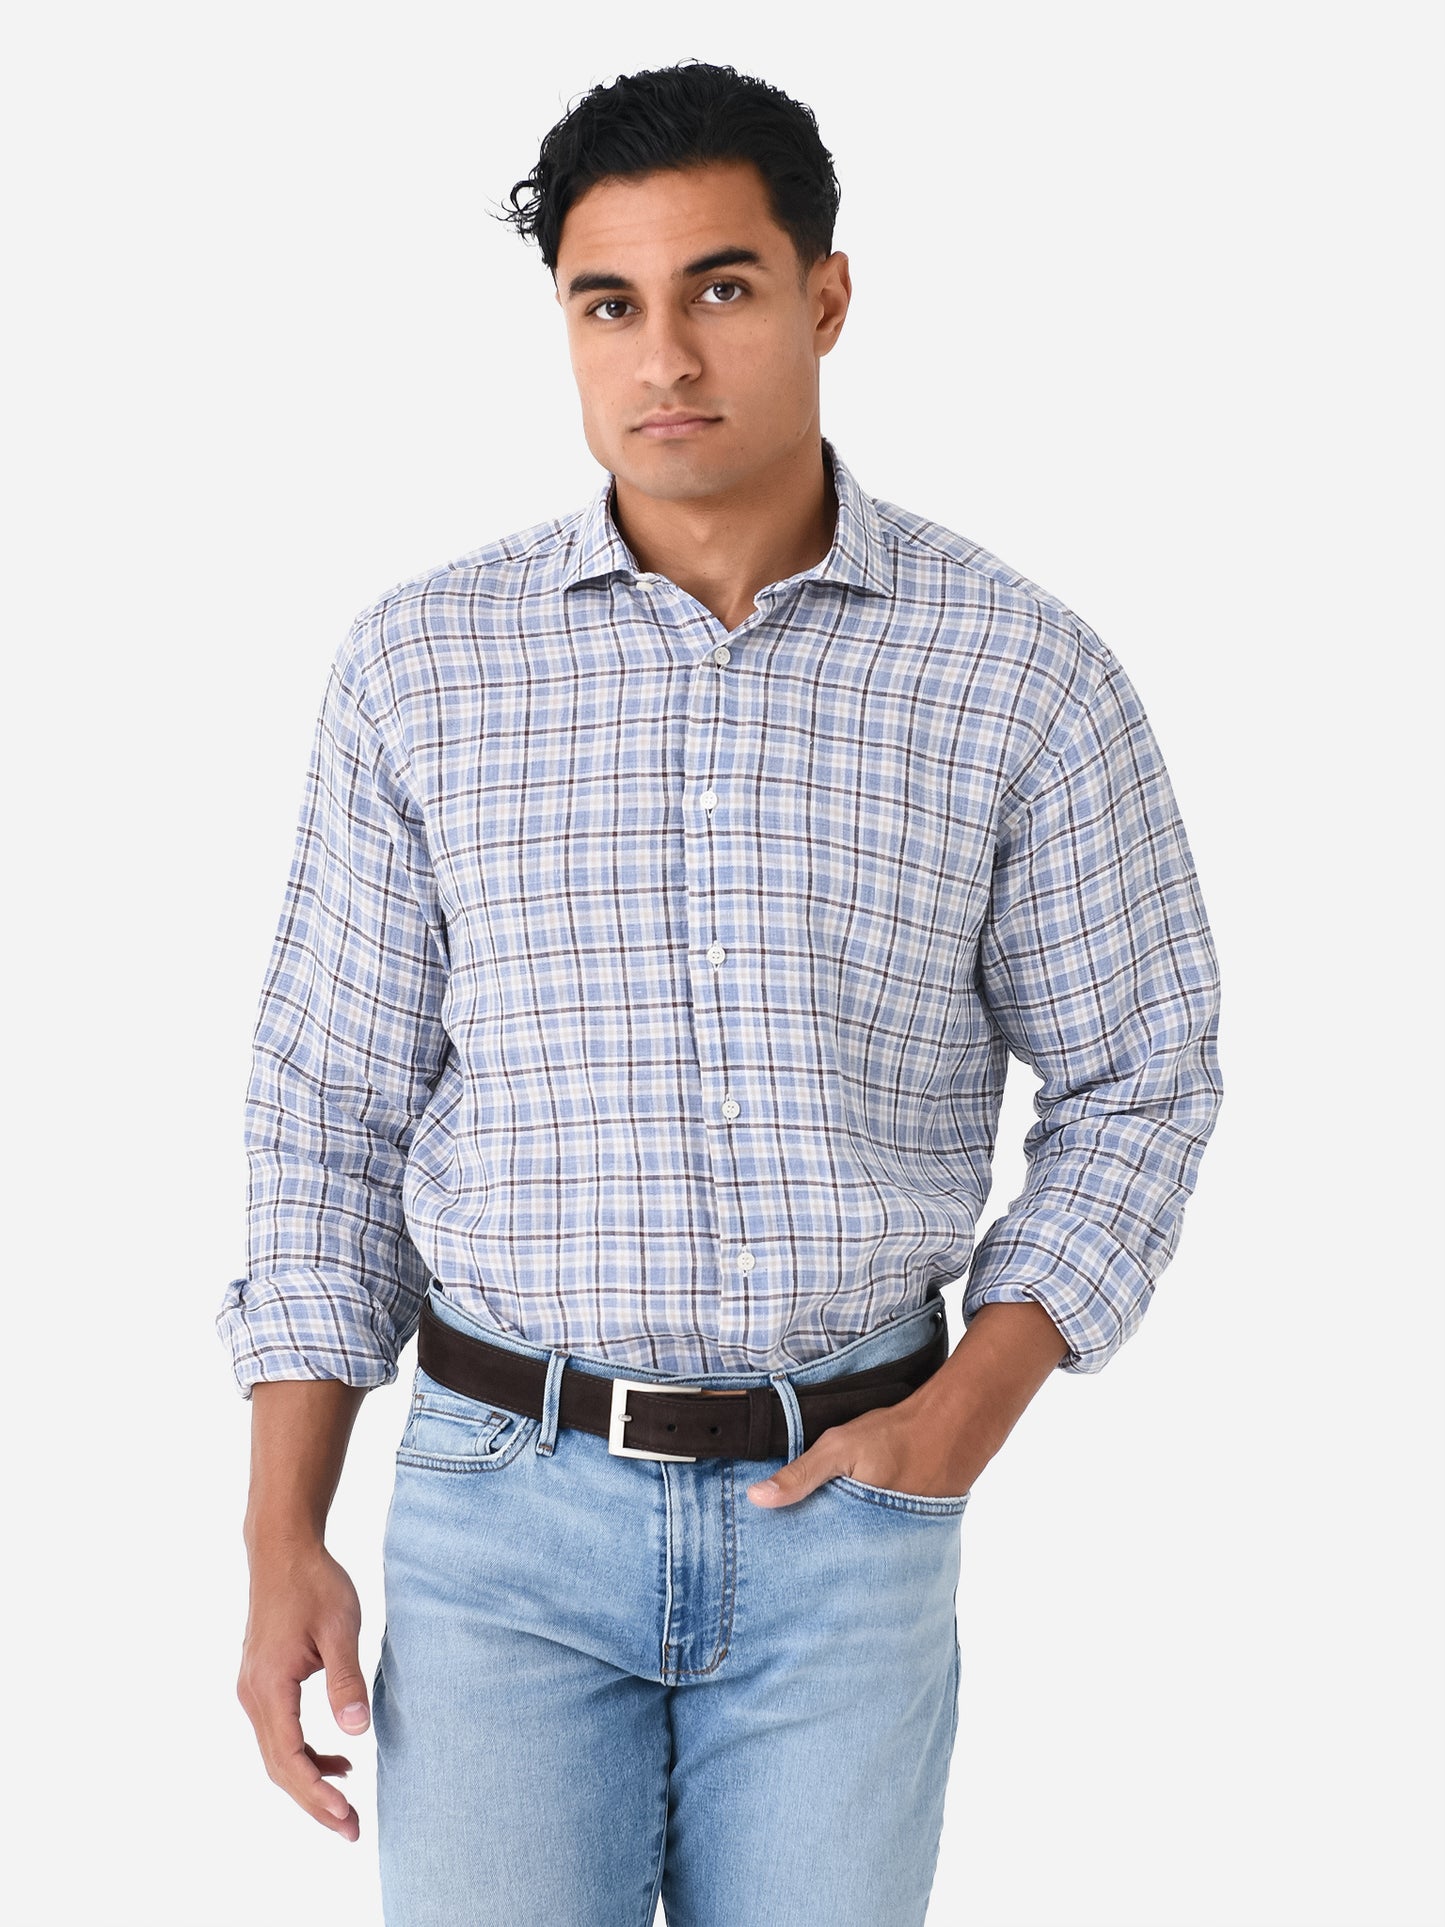 Miller Westby Men's Bad Axe Button-Down Shirt